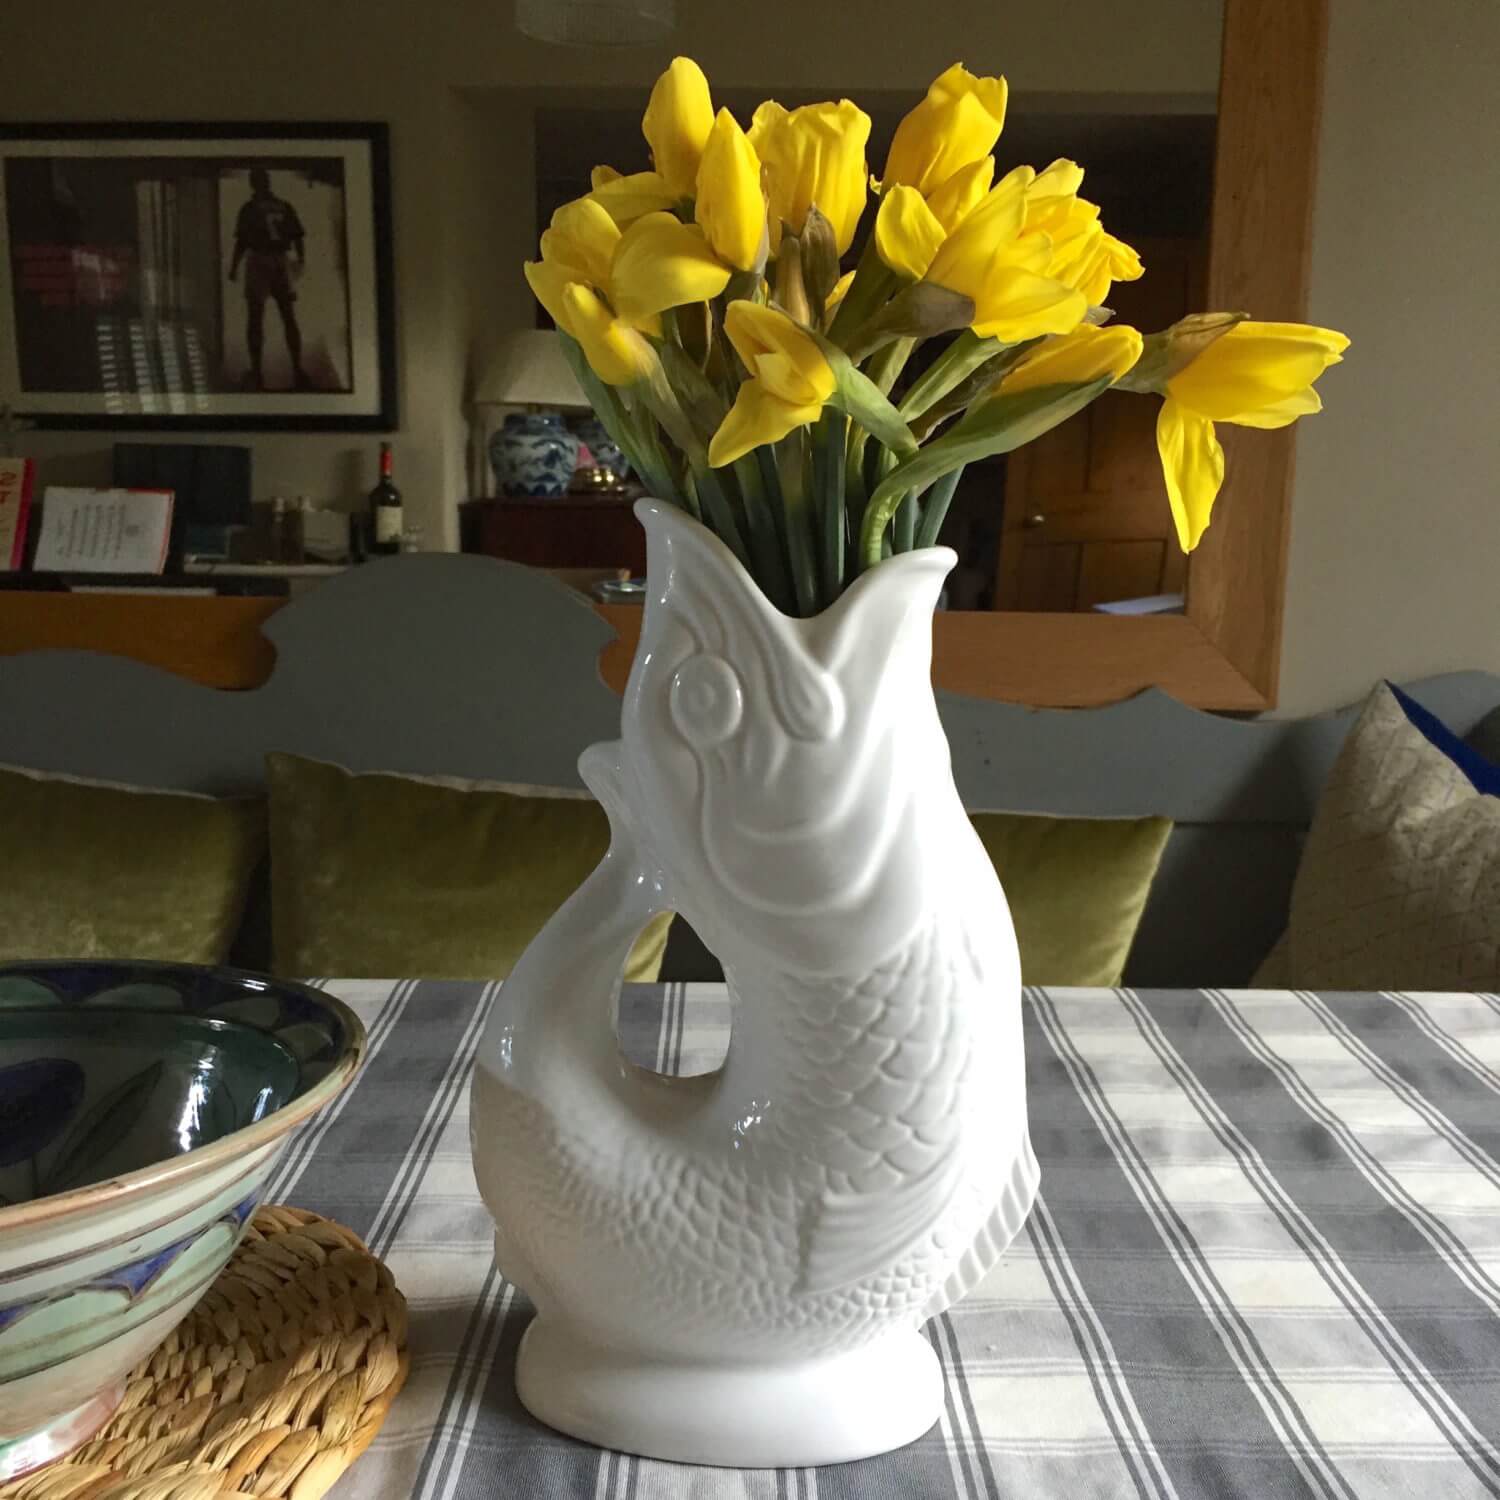 Gluggle jug with daffodils